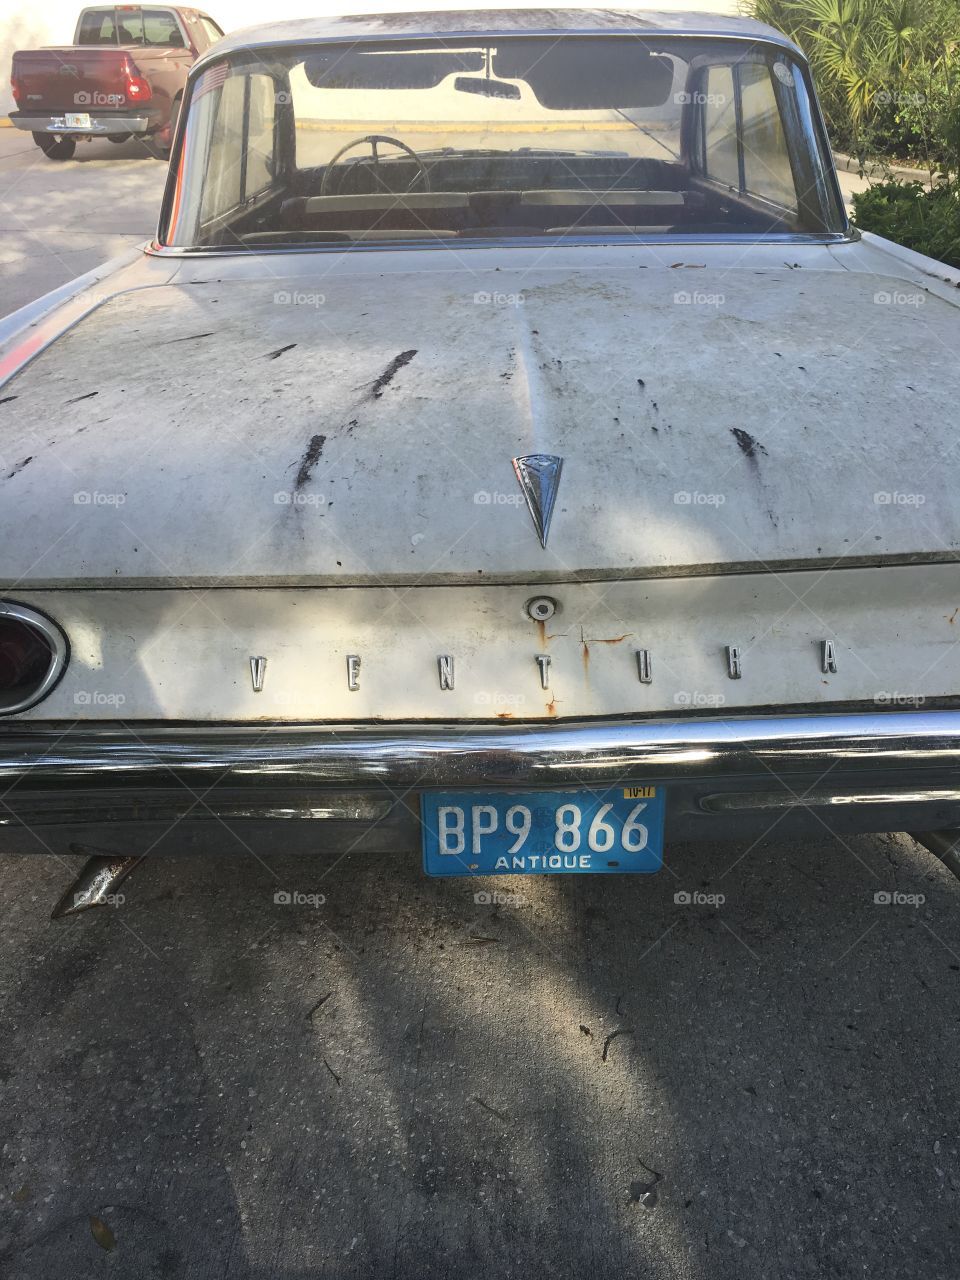 Pontiac Ventura 